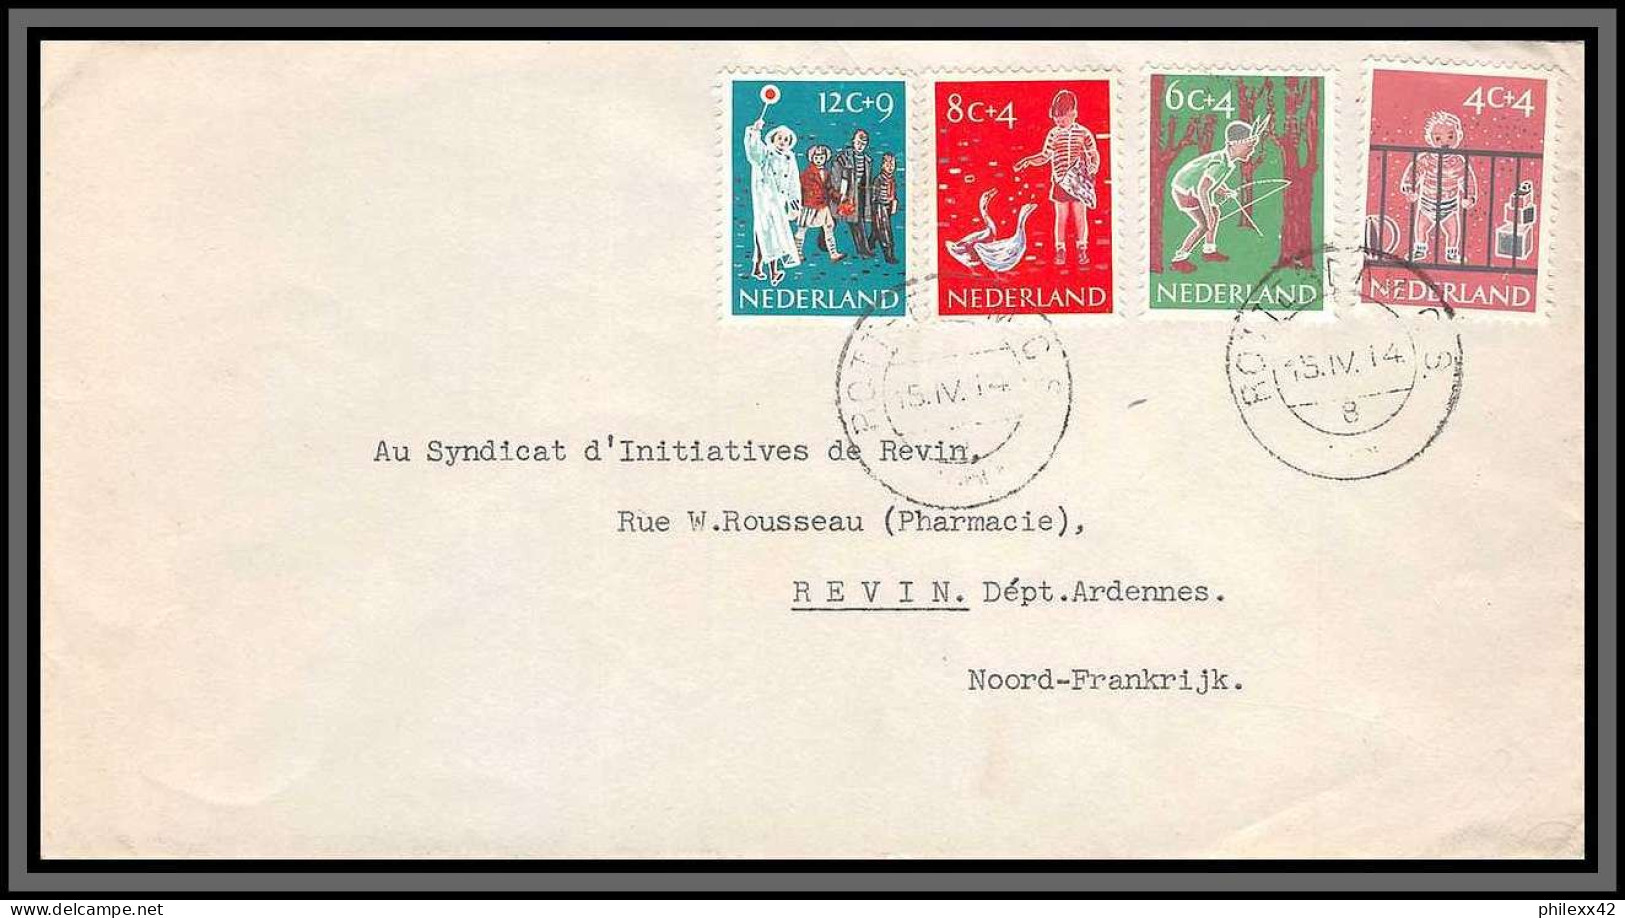 11355 1959 Kind. Keurig Getypt Adres Rotterdam Pour Revin Ardennes Lettre Cover Pays Bas Nederland  - Poststempels/ Marcofilie